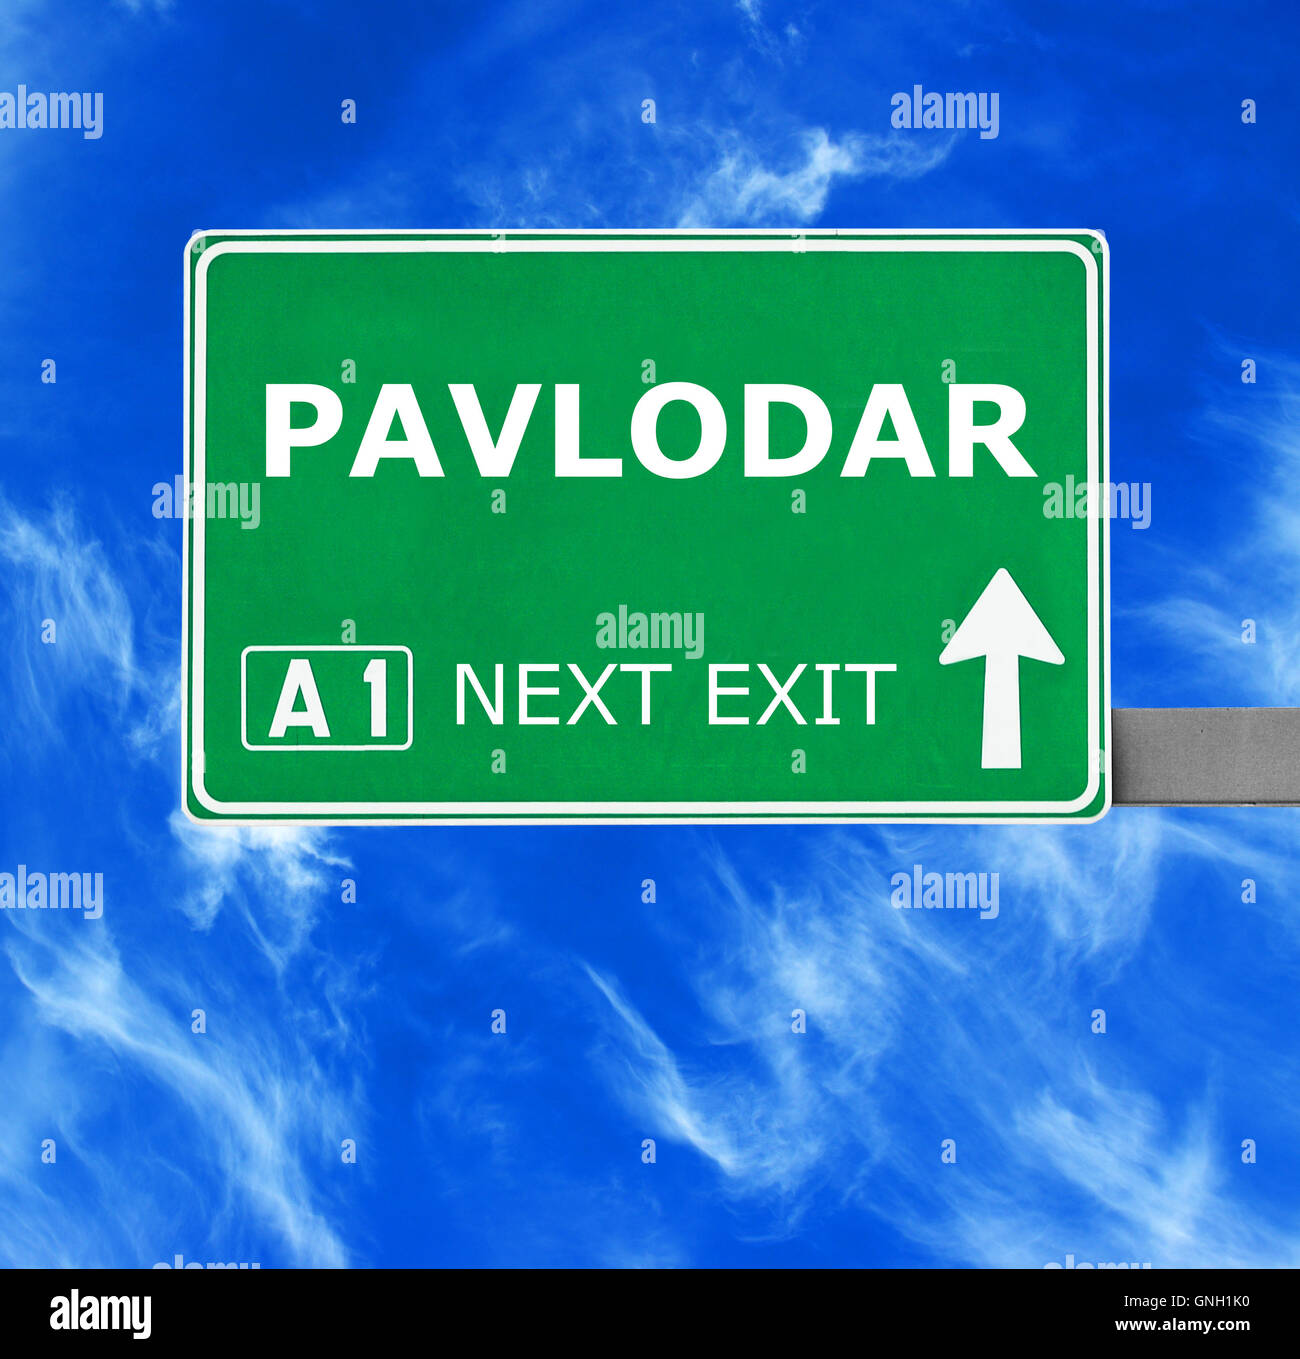 PAVLODAR road sign against clear blue sky Stock Photo